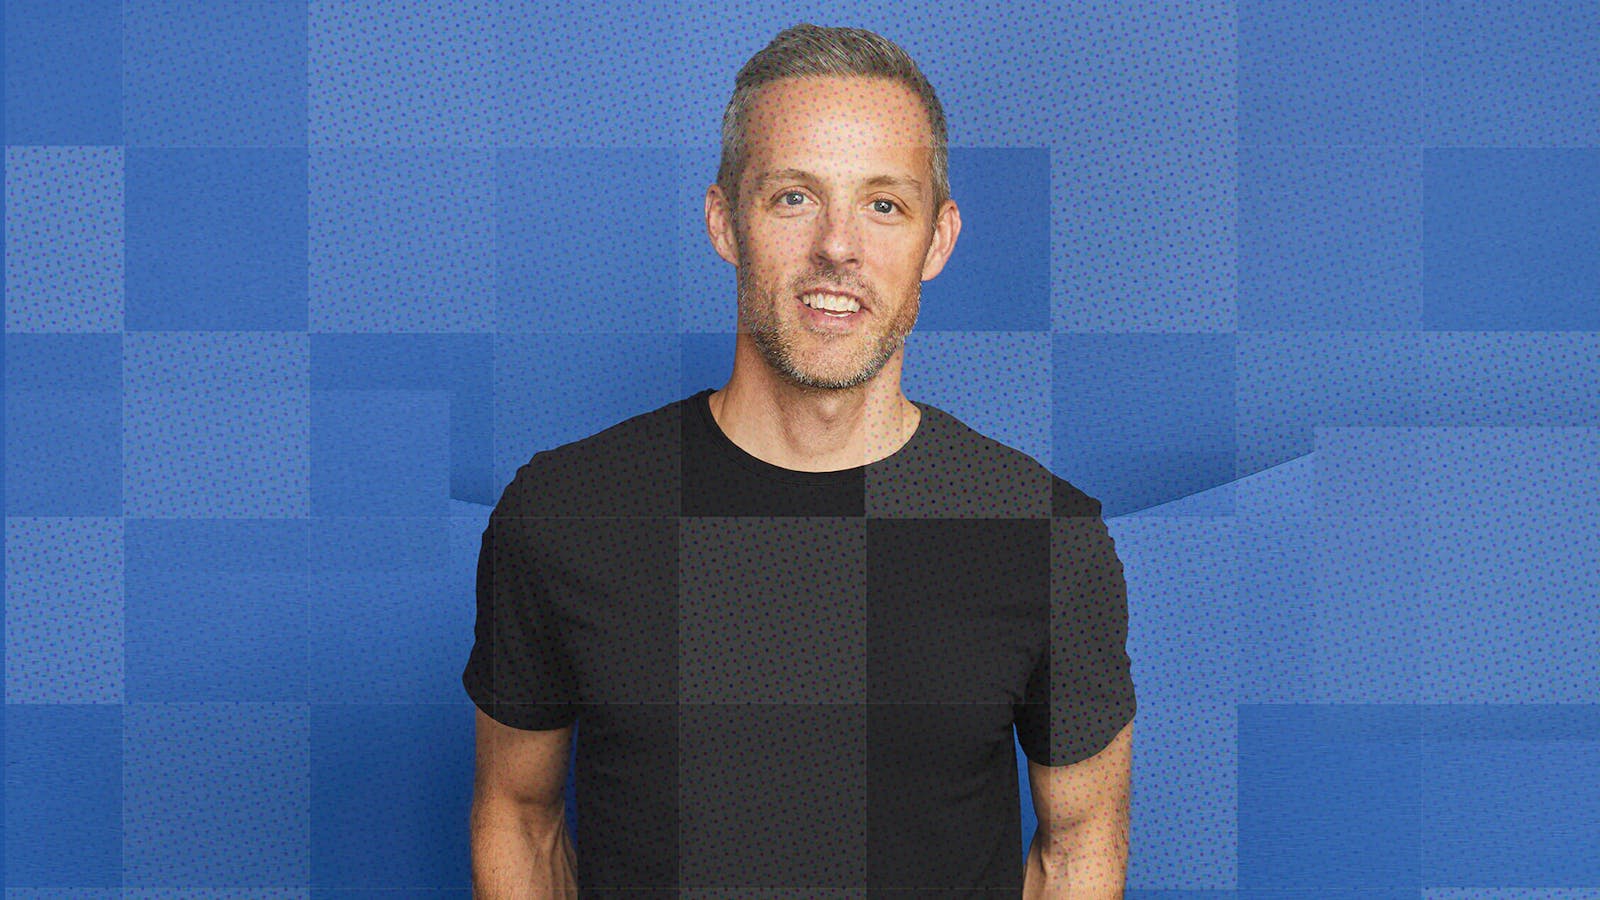 Atlassian's Jay Simons. Photo by Atlassian